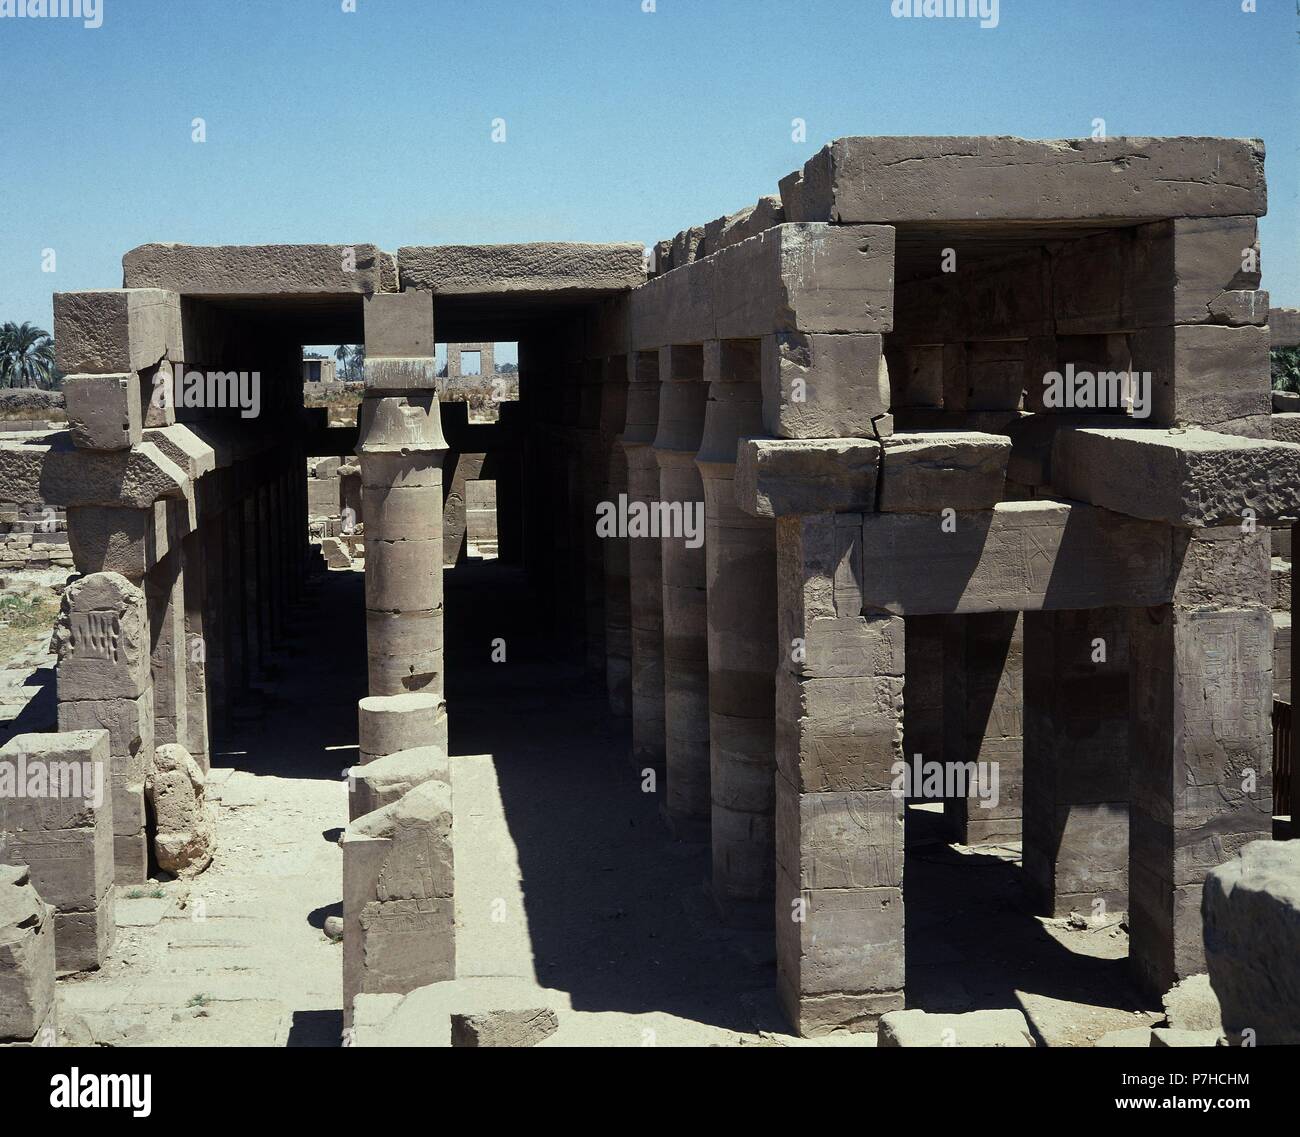 SALA HIPOSTILA DEL TEMPLO DE RAMSES III. Location: KARNAC, THEBES, EGYPT. Stock Photo